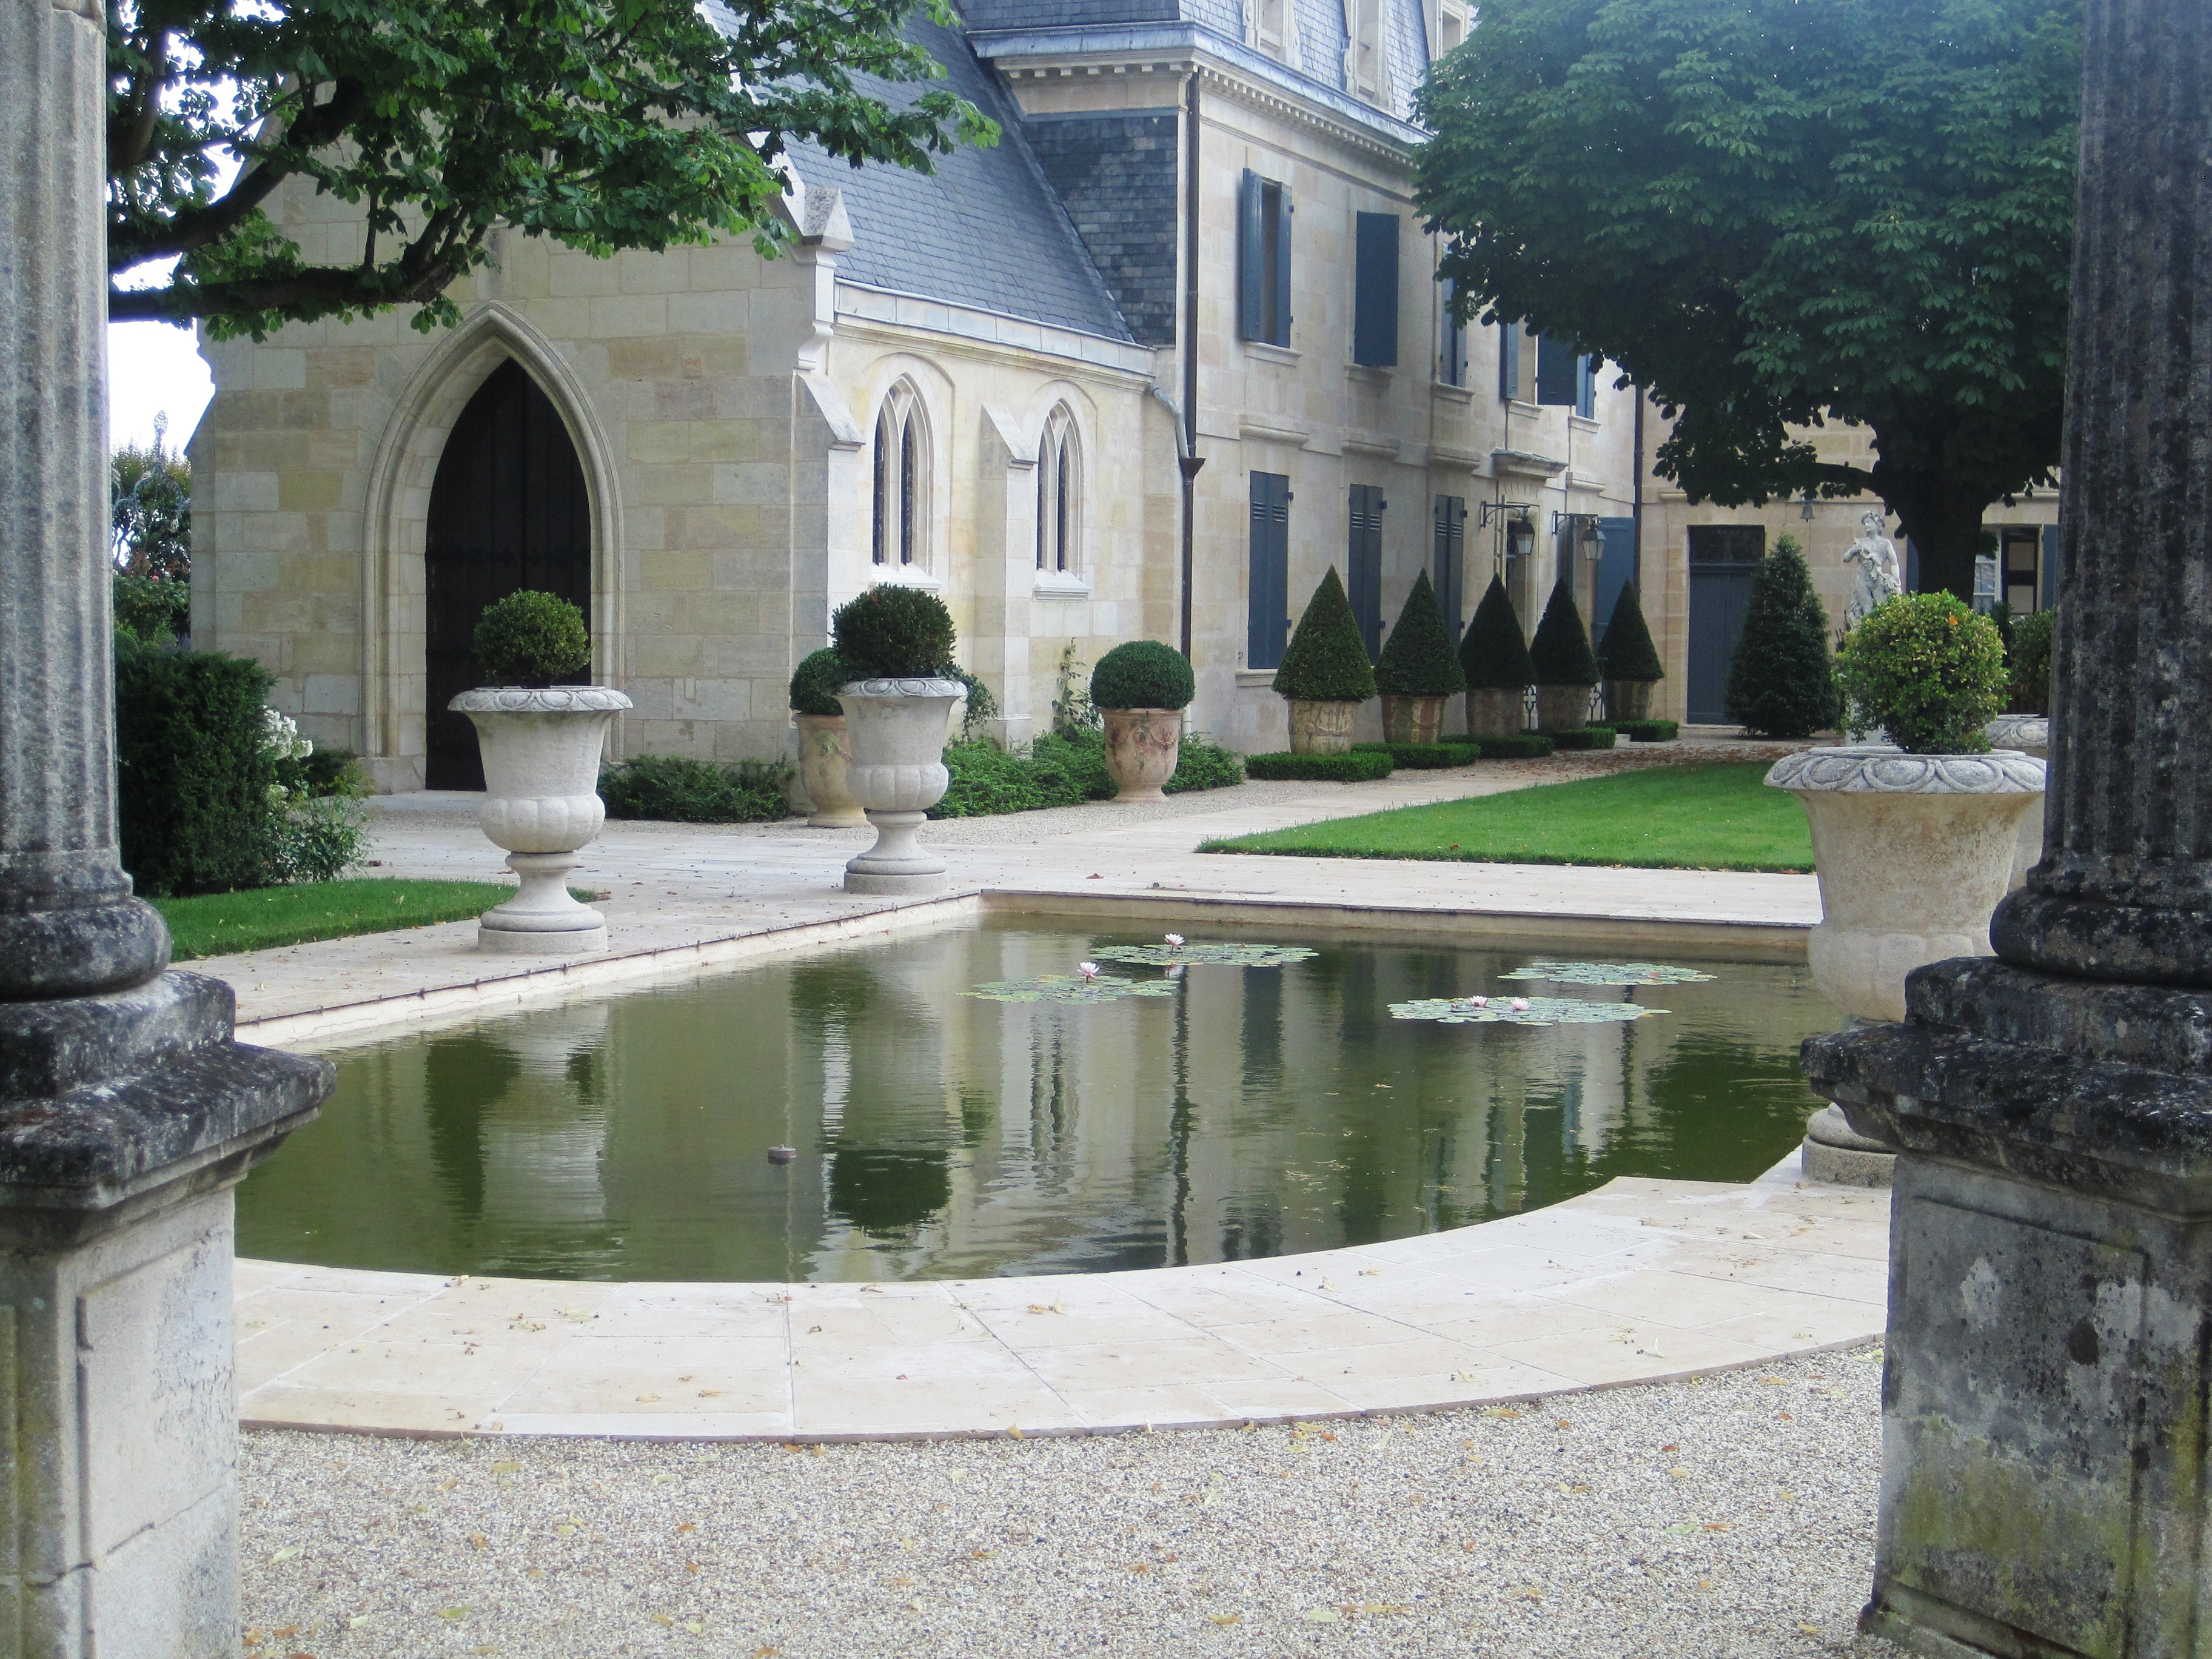 Learn about Chateau La Mission Haut Brion, the Complete Guide